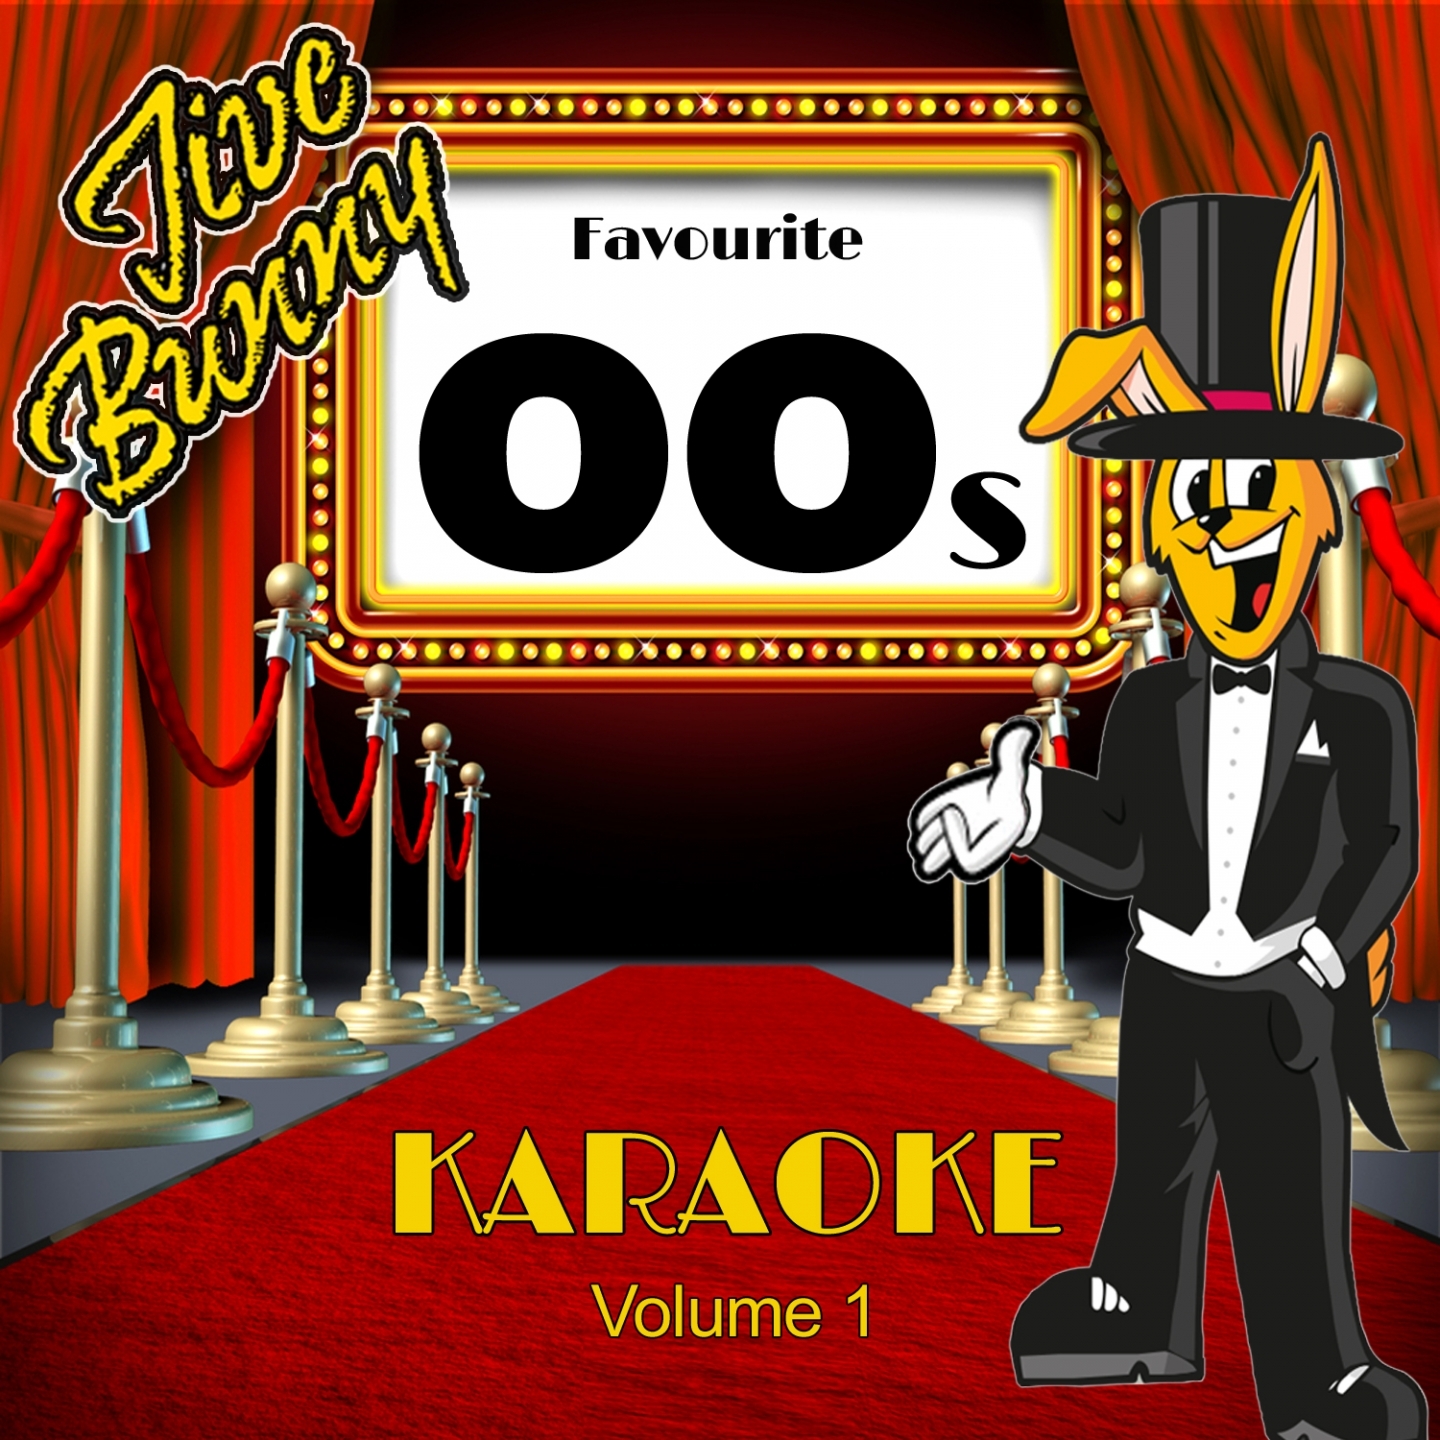 Jive Bunny's Favourite 00's Album - Karaoke, Vol. 1